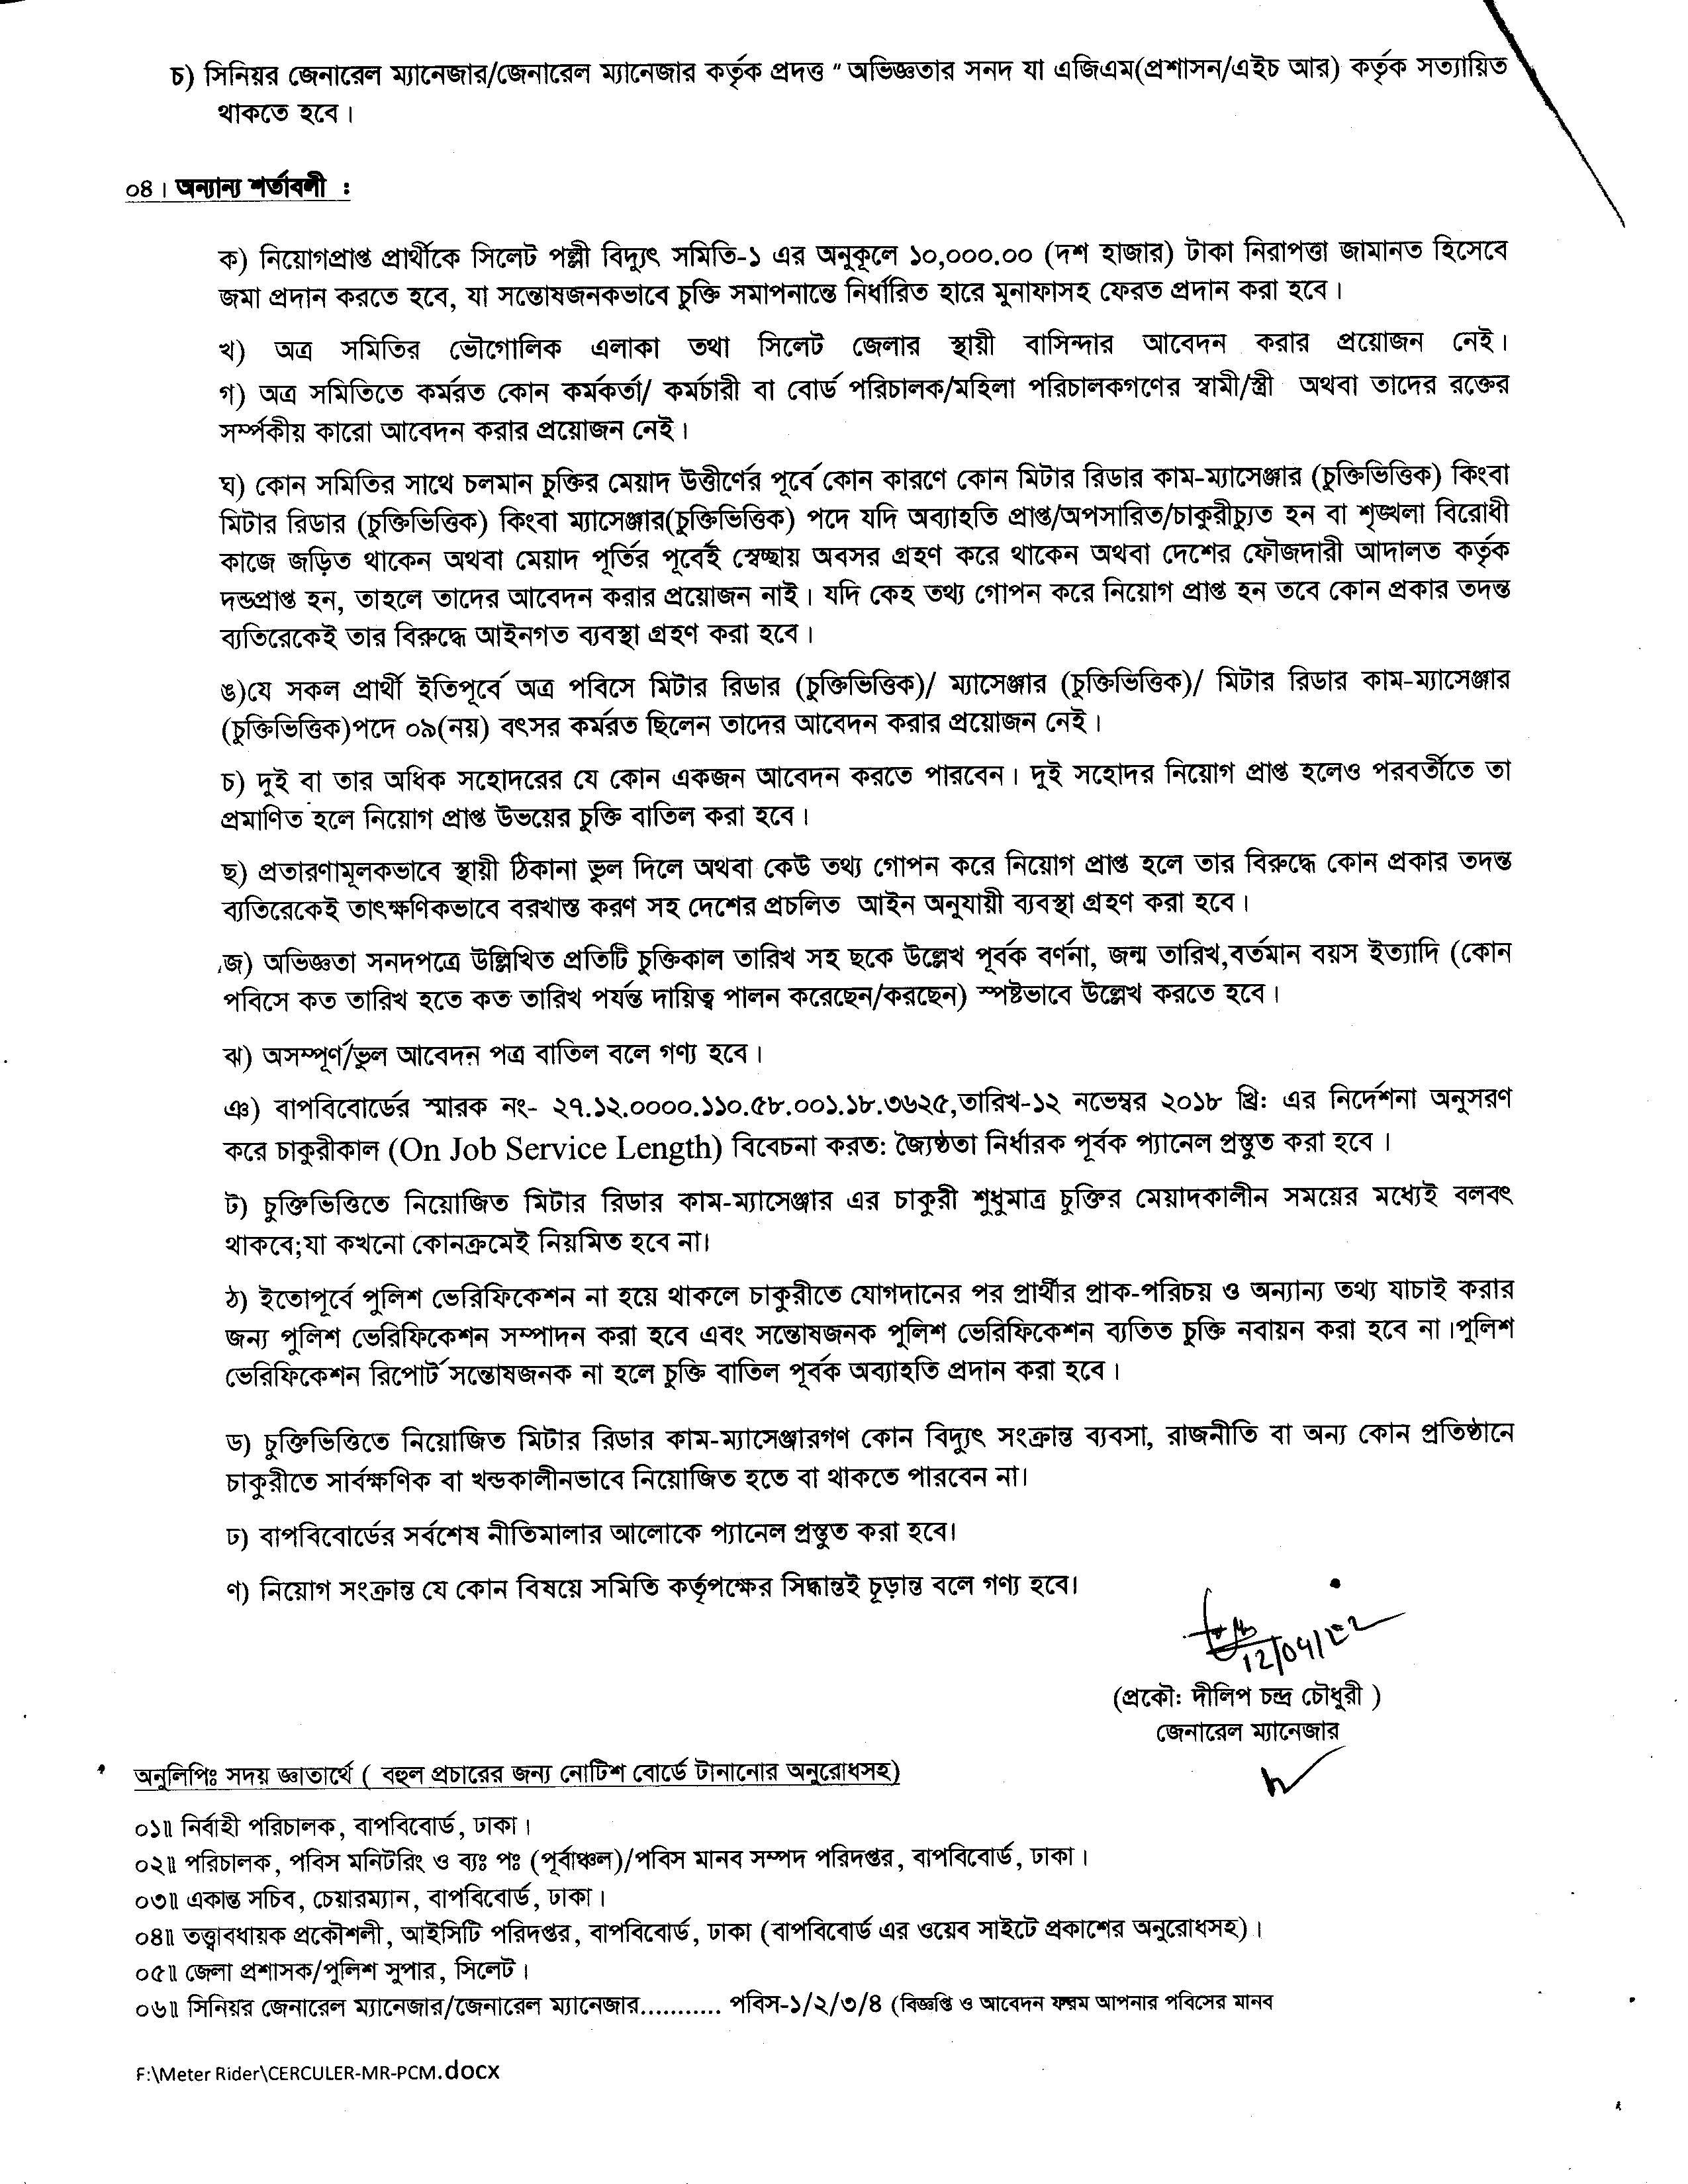 Sylhet Palli Bidyut Samity job Circular 2022